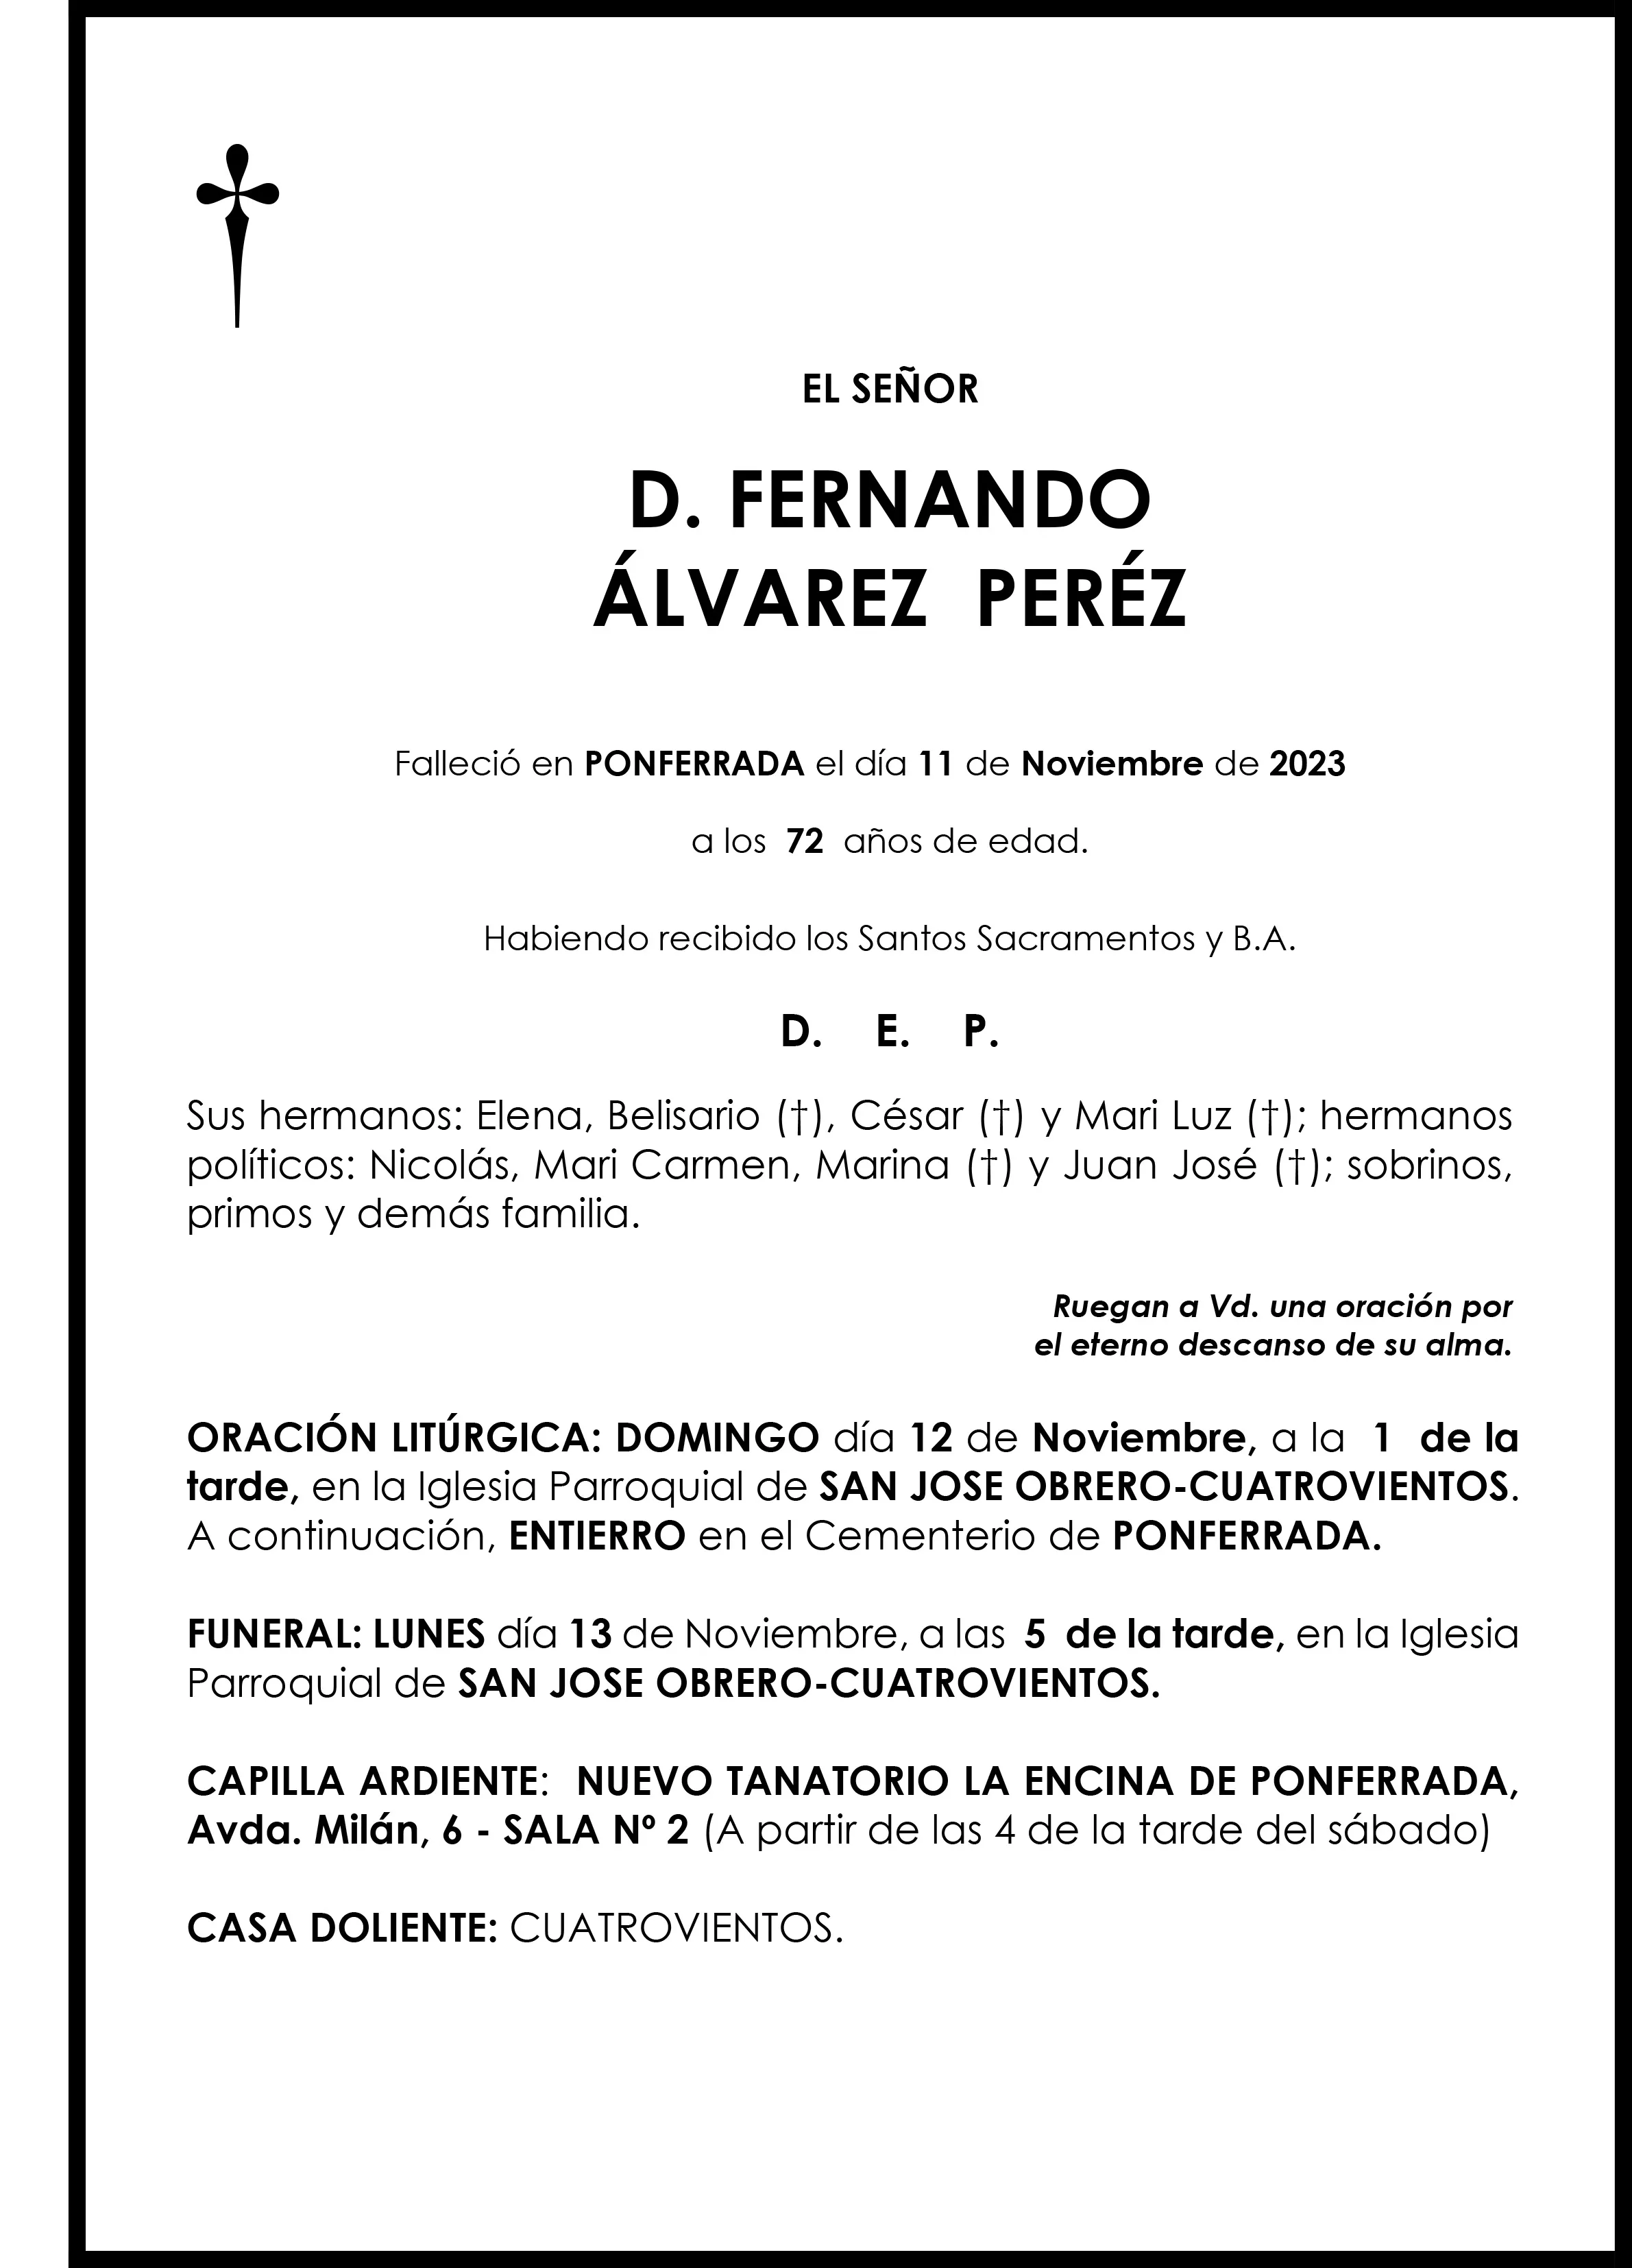 FERNANDO ALVAREZ PEREZ